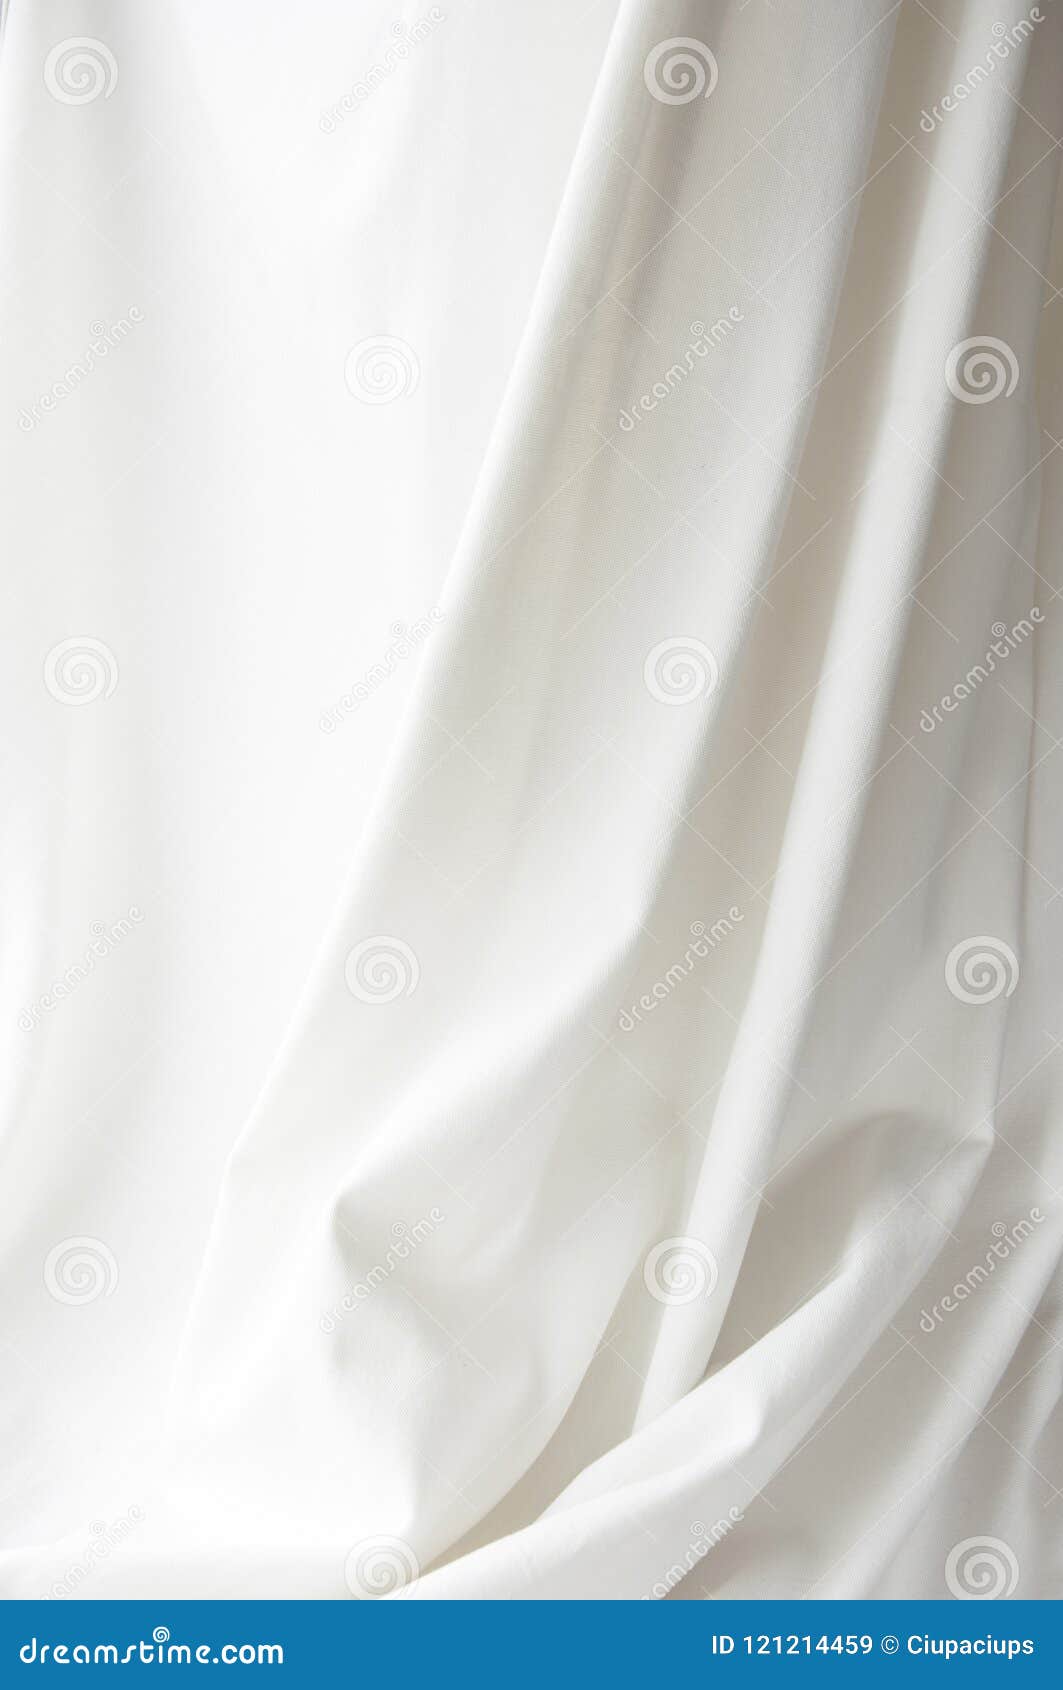 White Elegant Canvas Cloth Texture Drapery Background Stock Image Image Of Crumpled Background